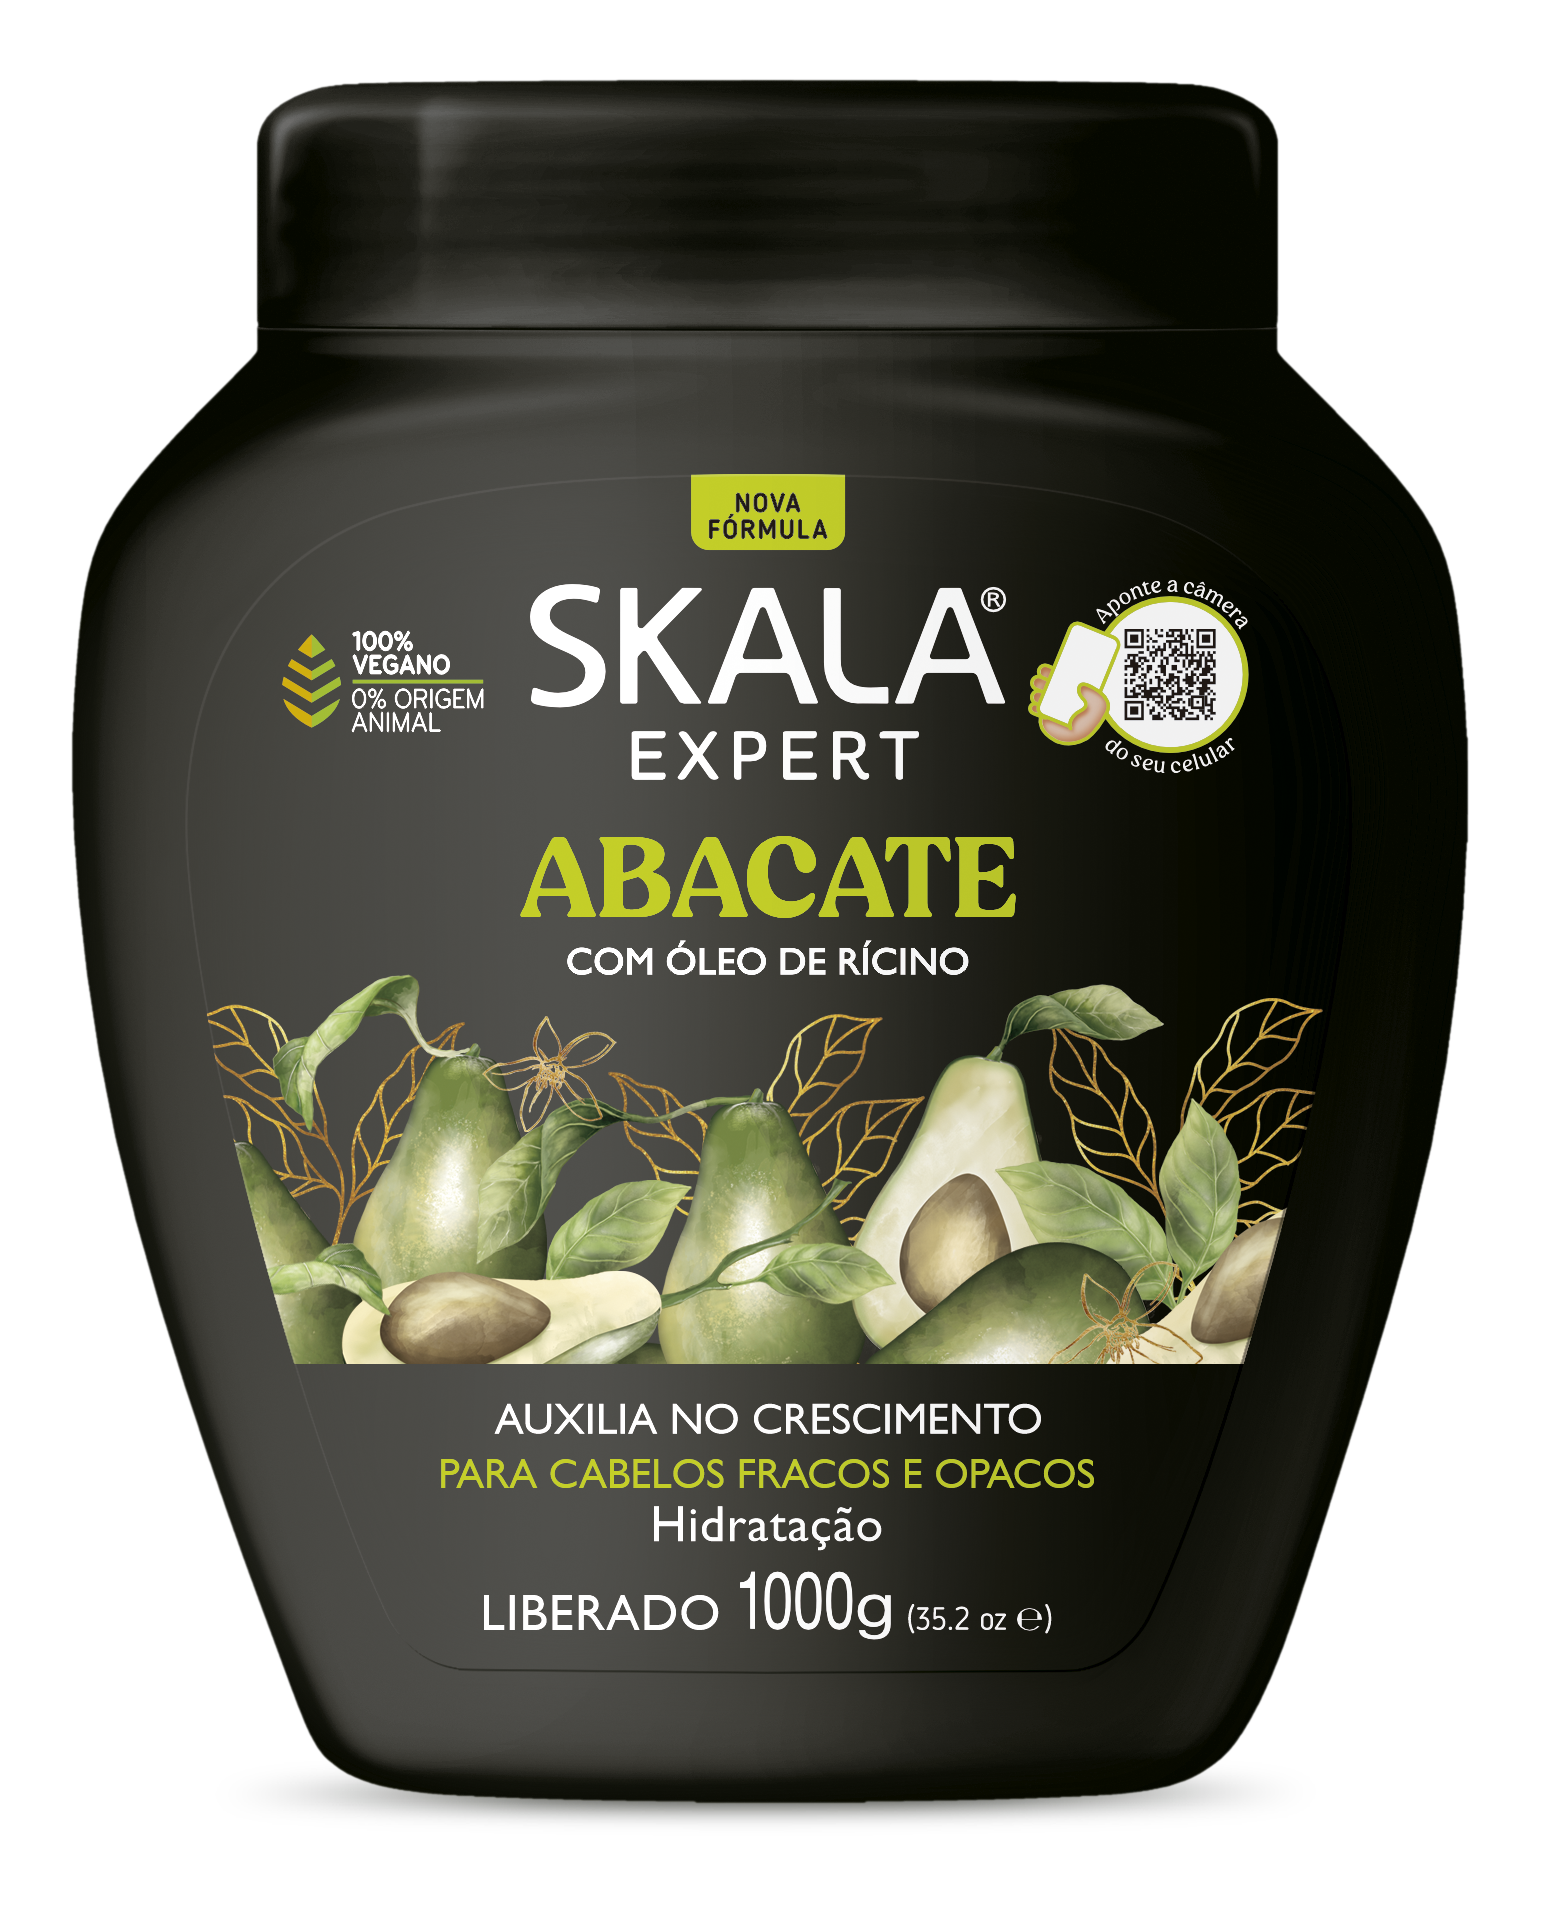 Skala Hair Treatment Creme De Tratamento Bomba De Vitaminas Abacate / Treatment Cream Pump Avocado Vitamins Treatment Cream - Skala